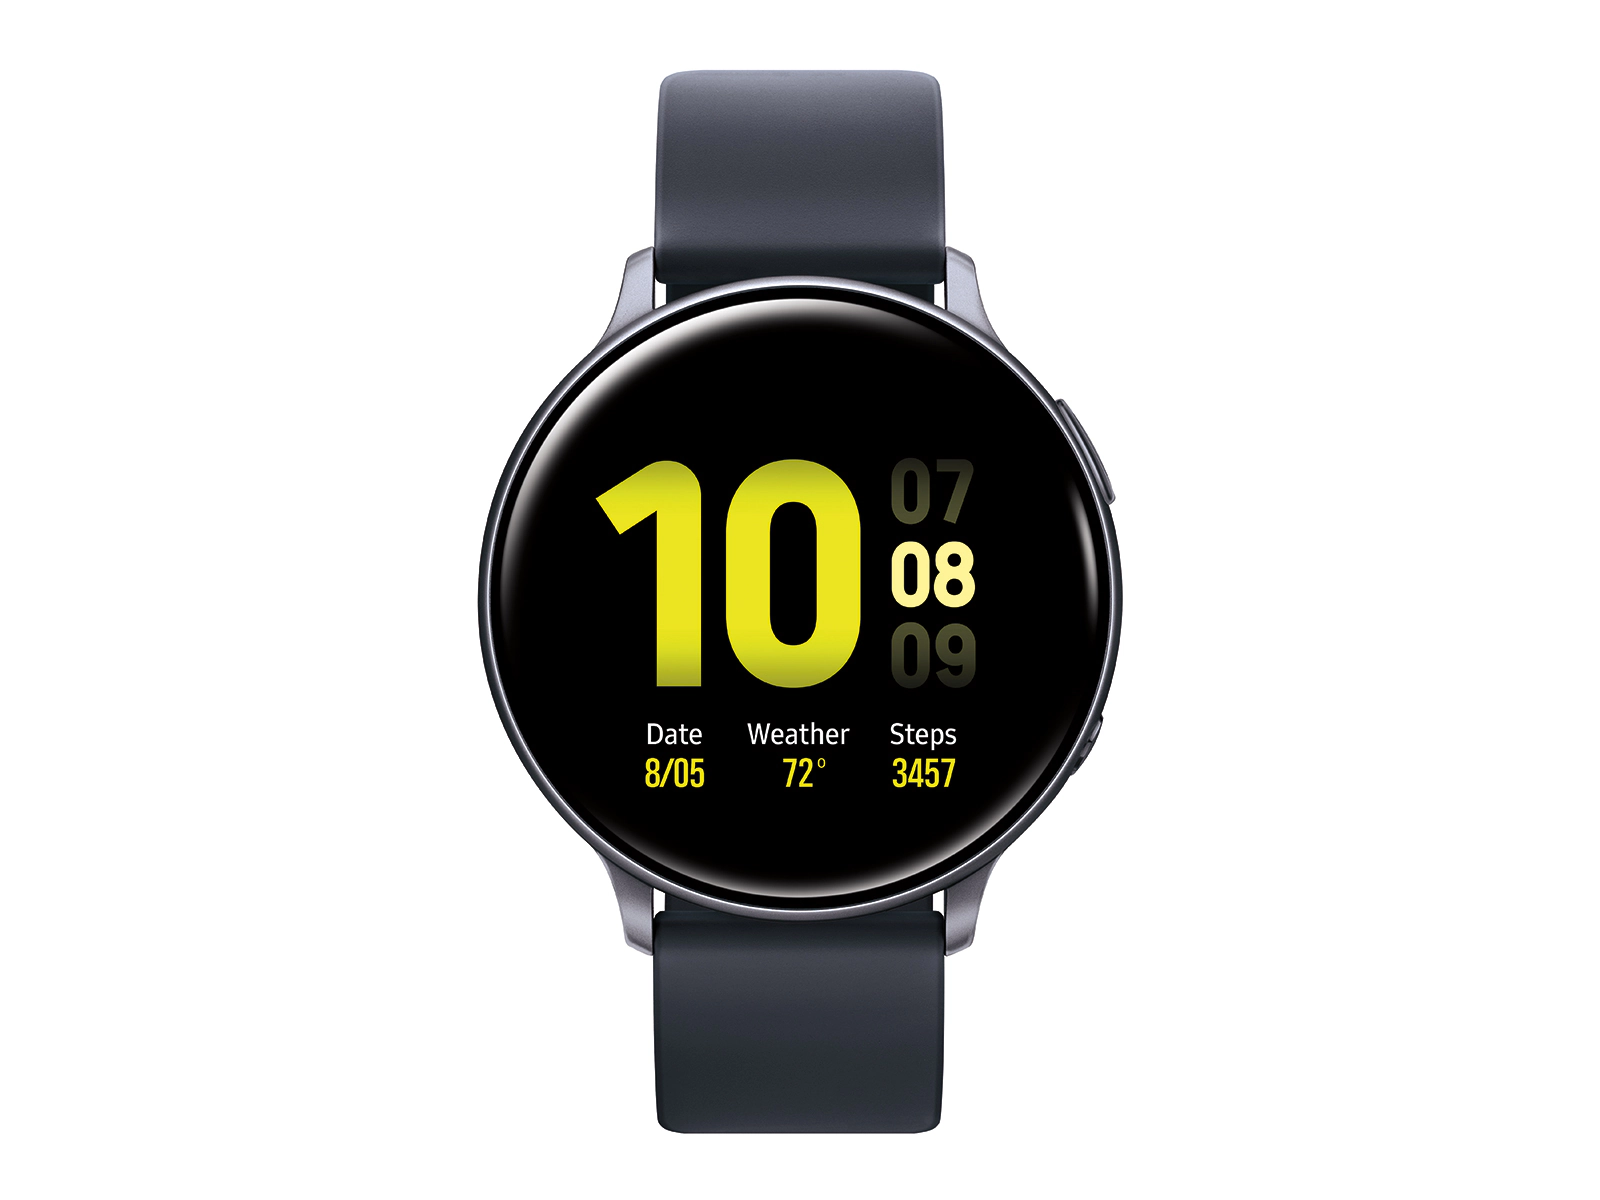 نمای روبروی ساعت Samsung Galaxy Watch Active 2